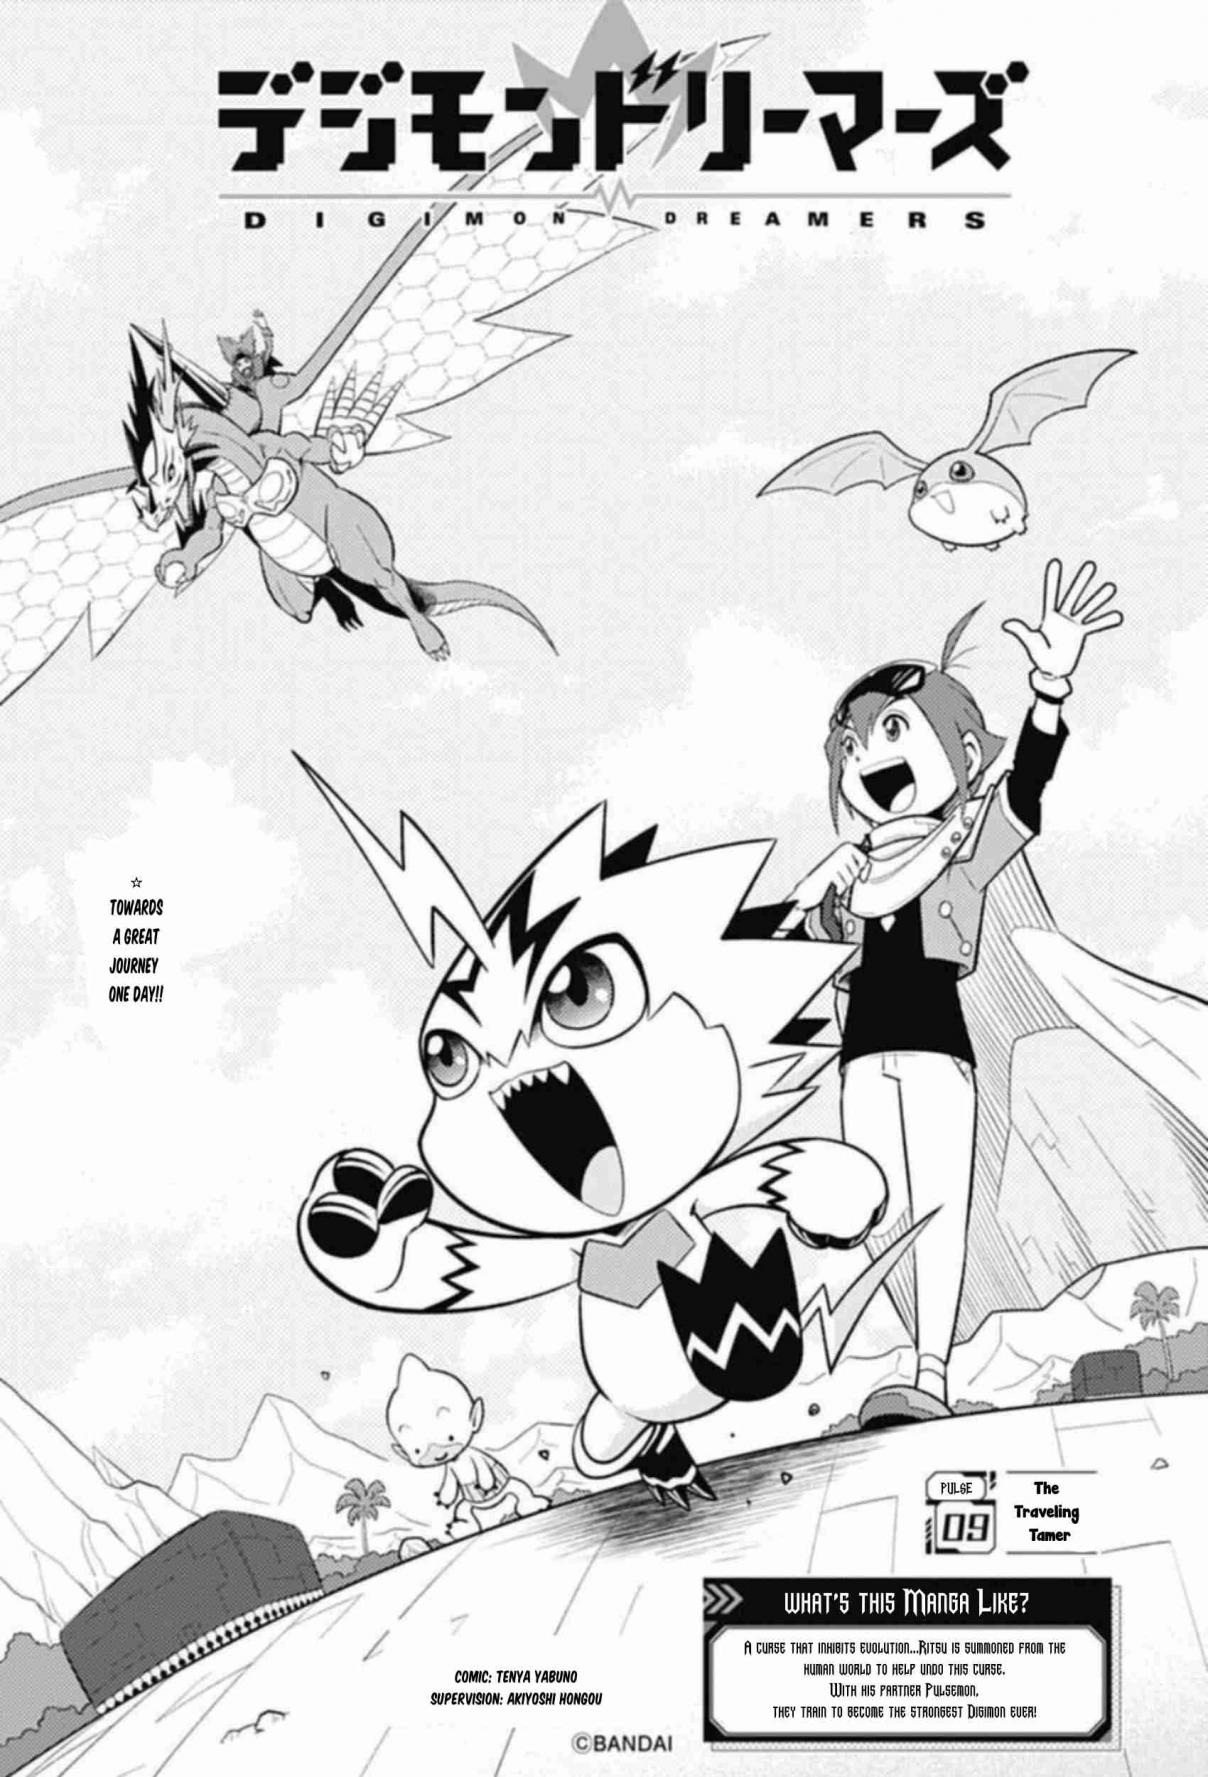 Digimon Dreamers 9